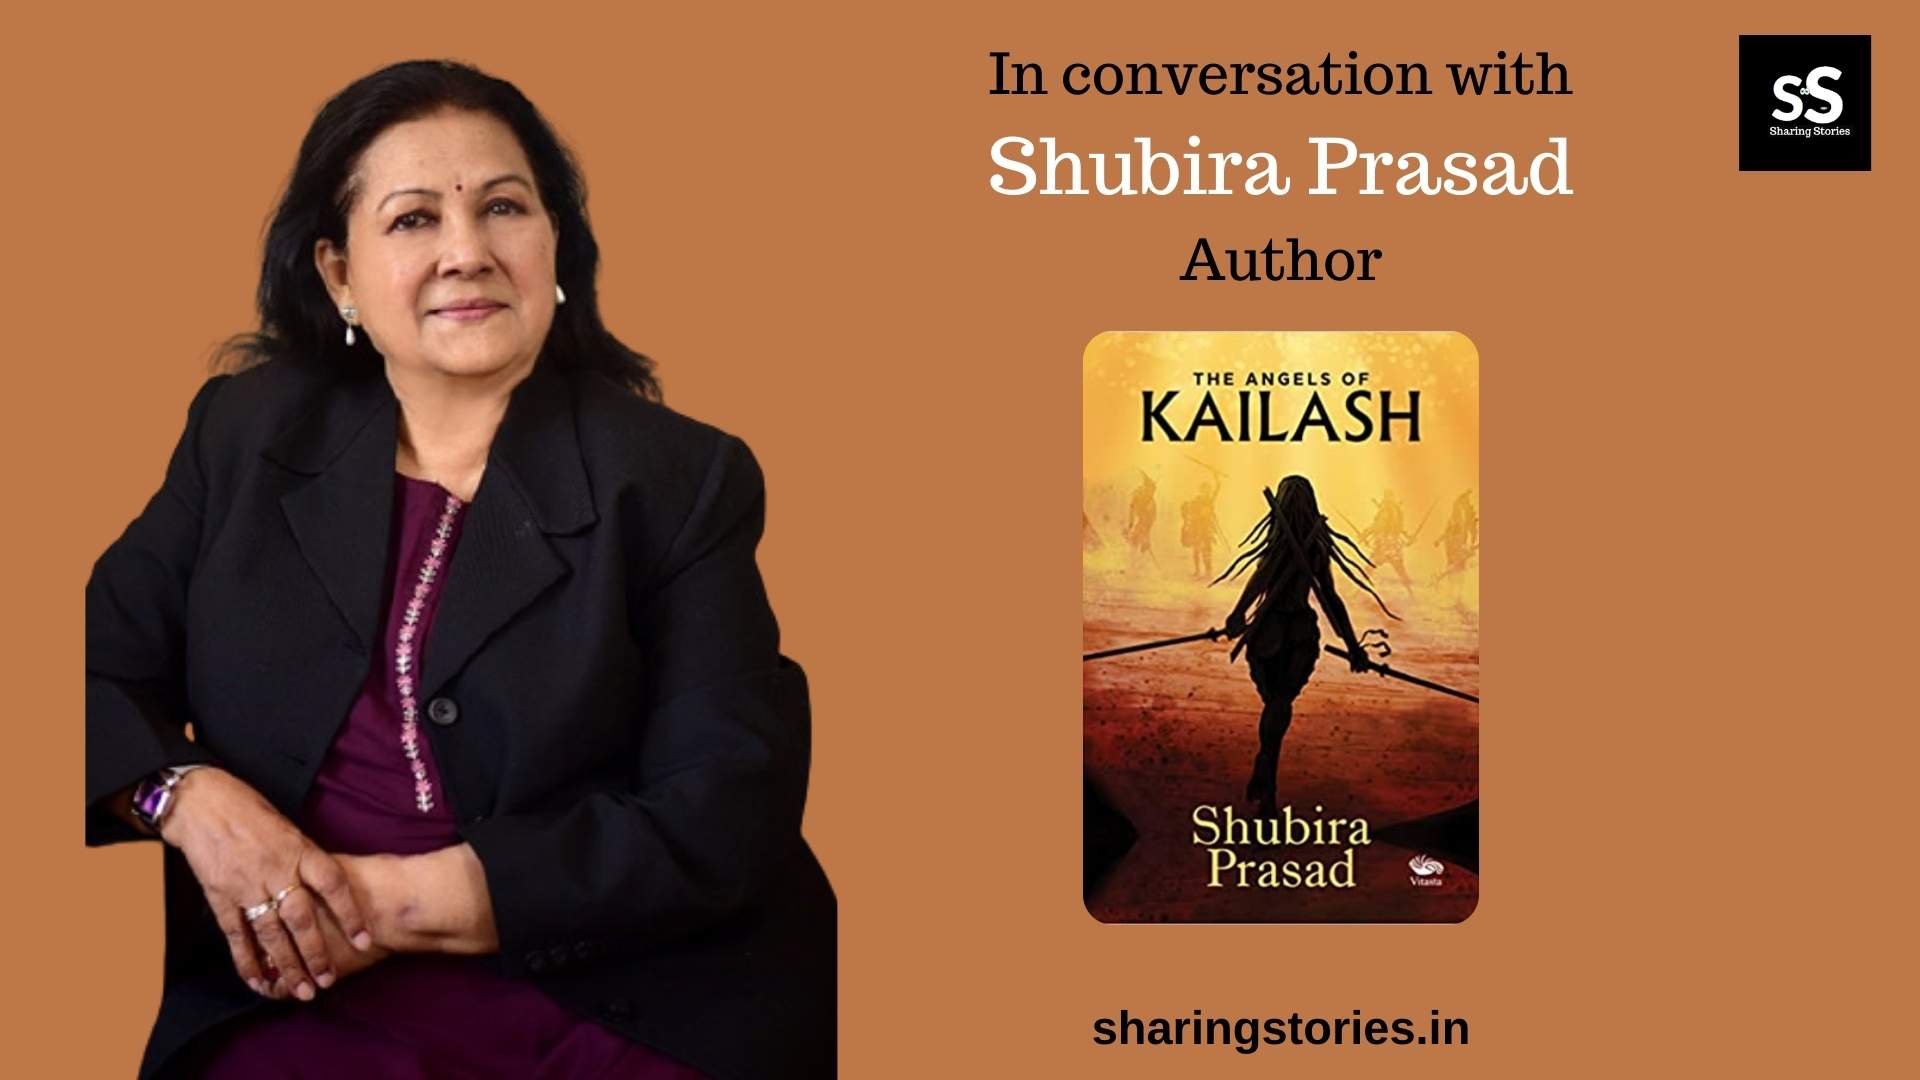 Author Shubira Prasad